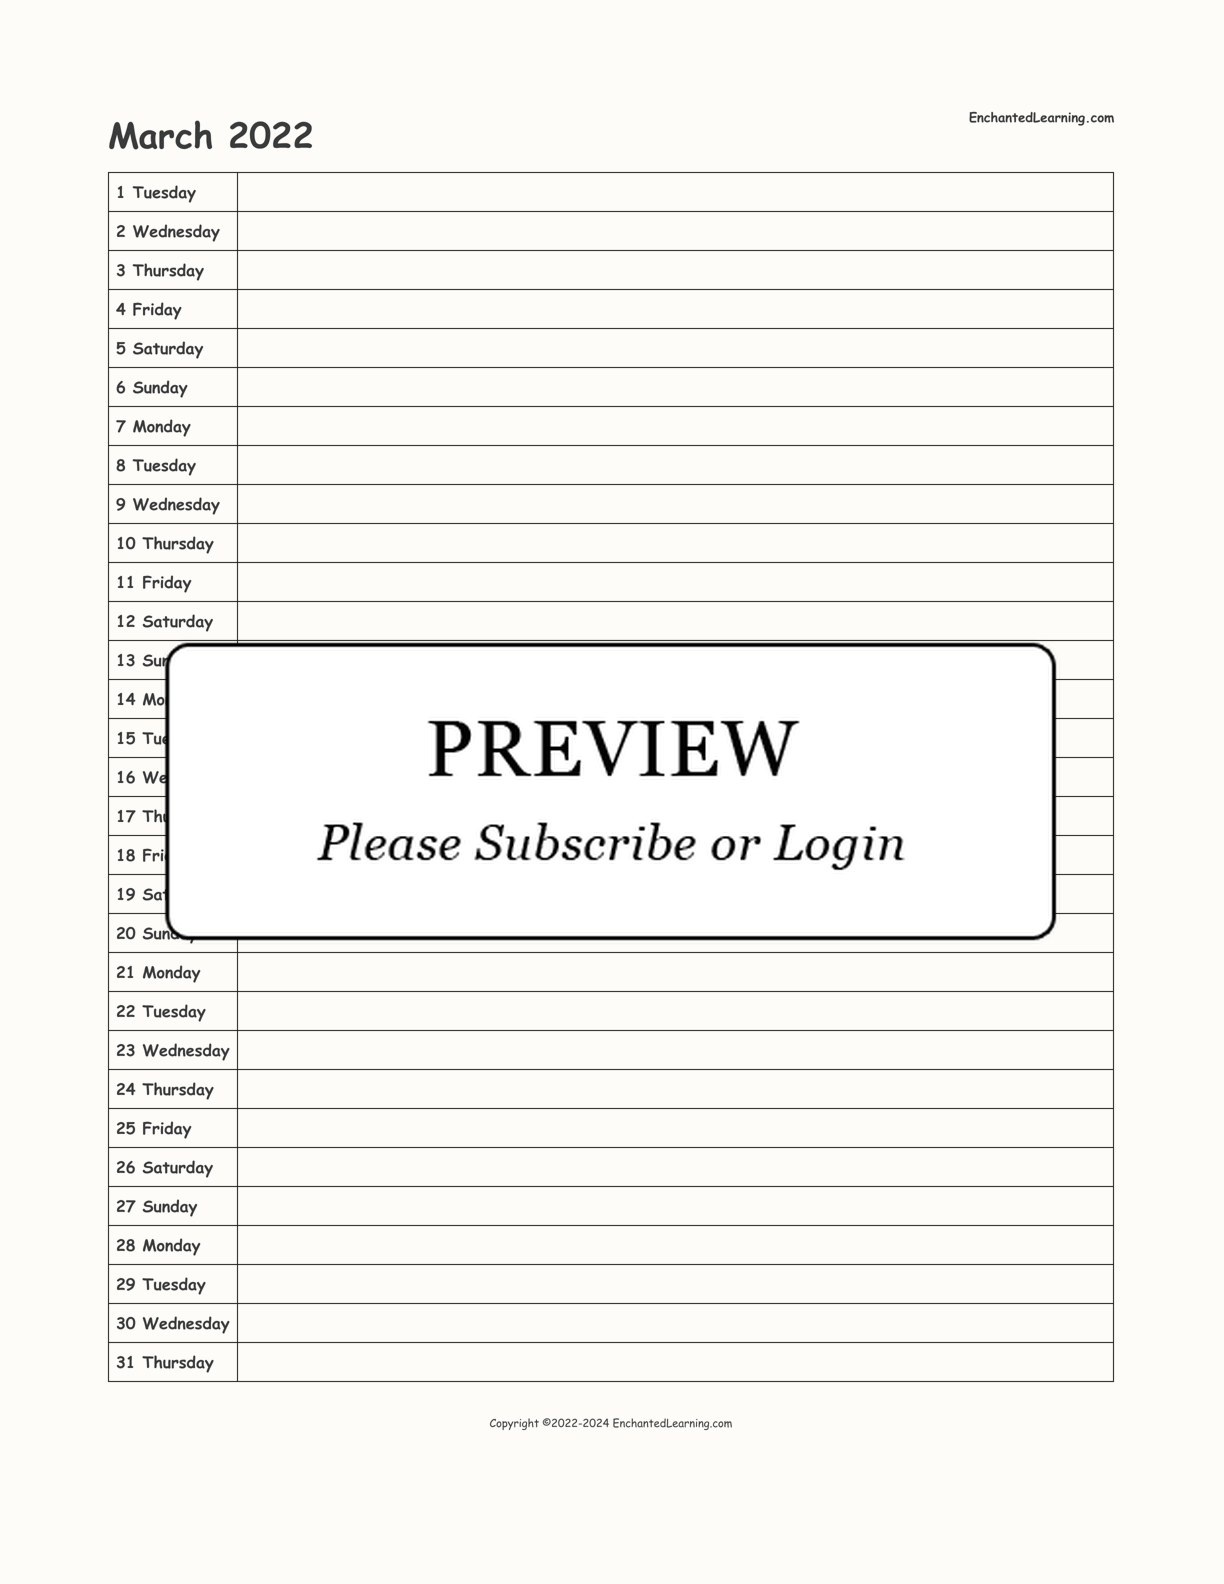 March 2022 Calendar interactive printout page 1